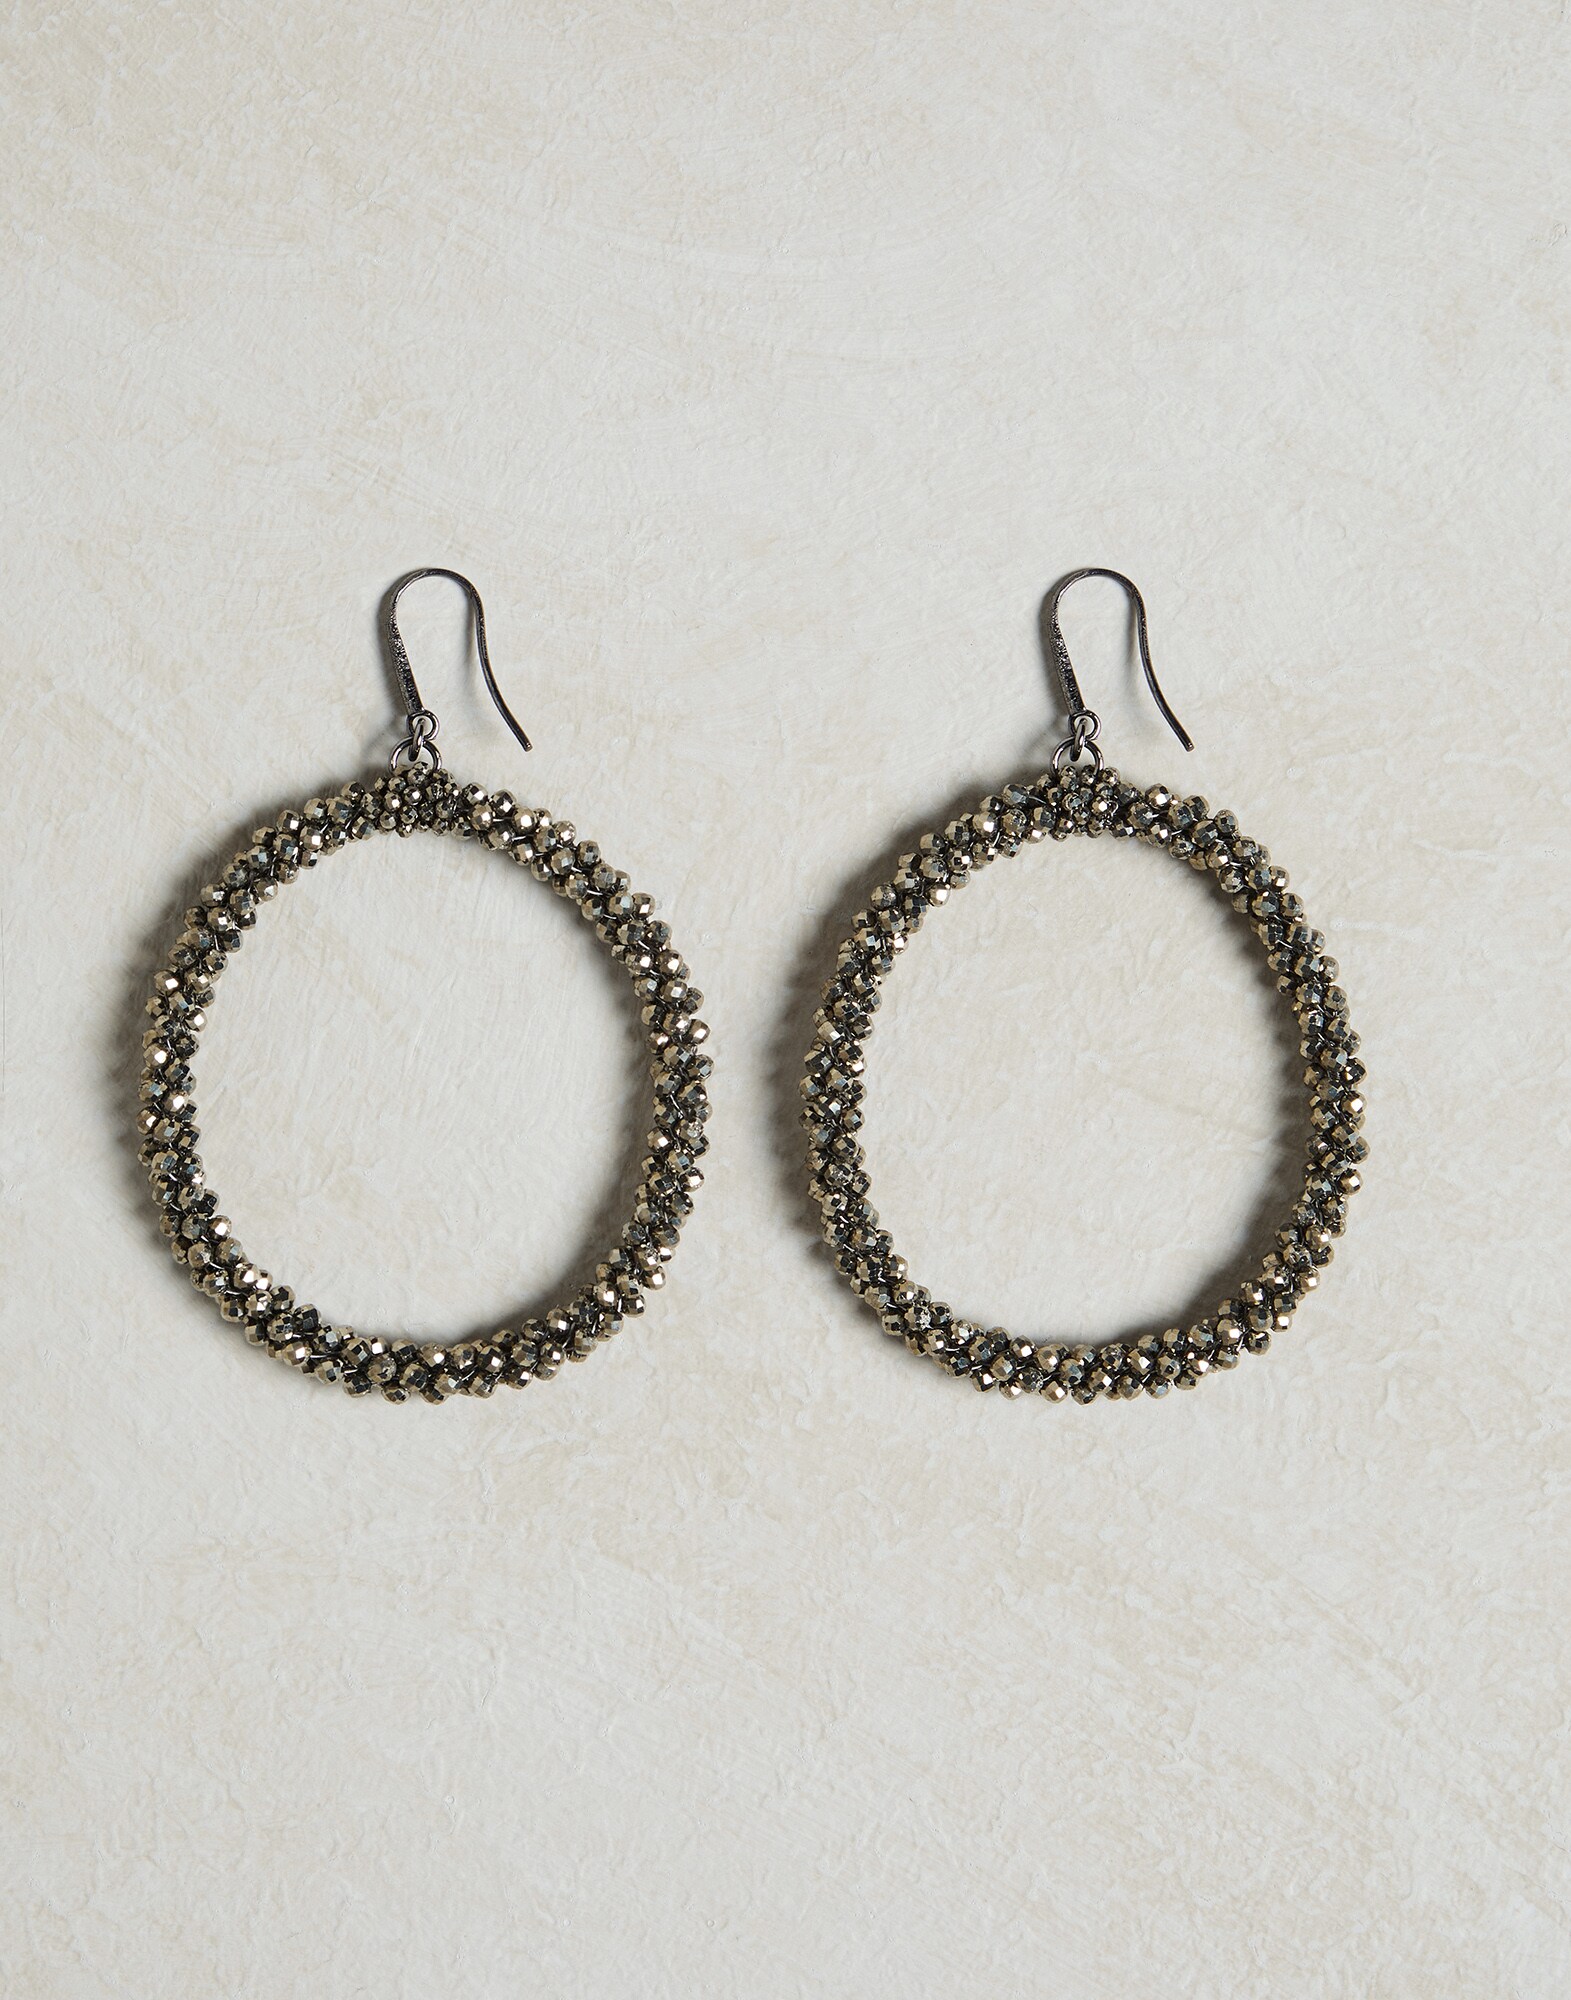 Pyrite earrings